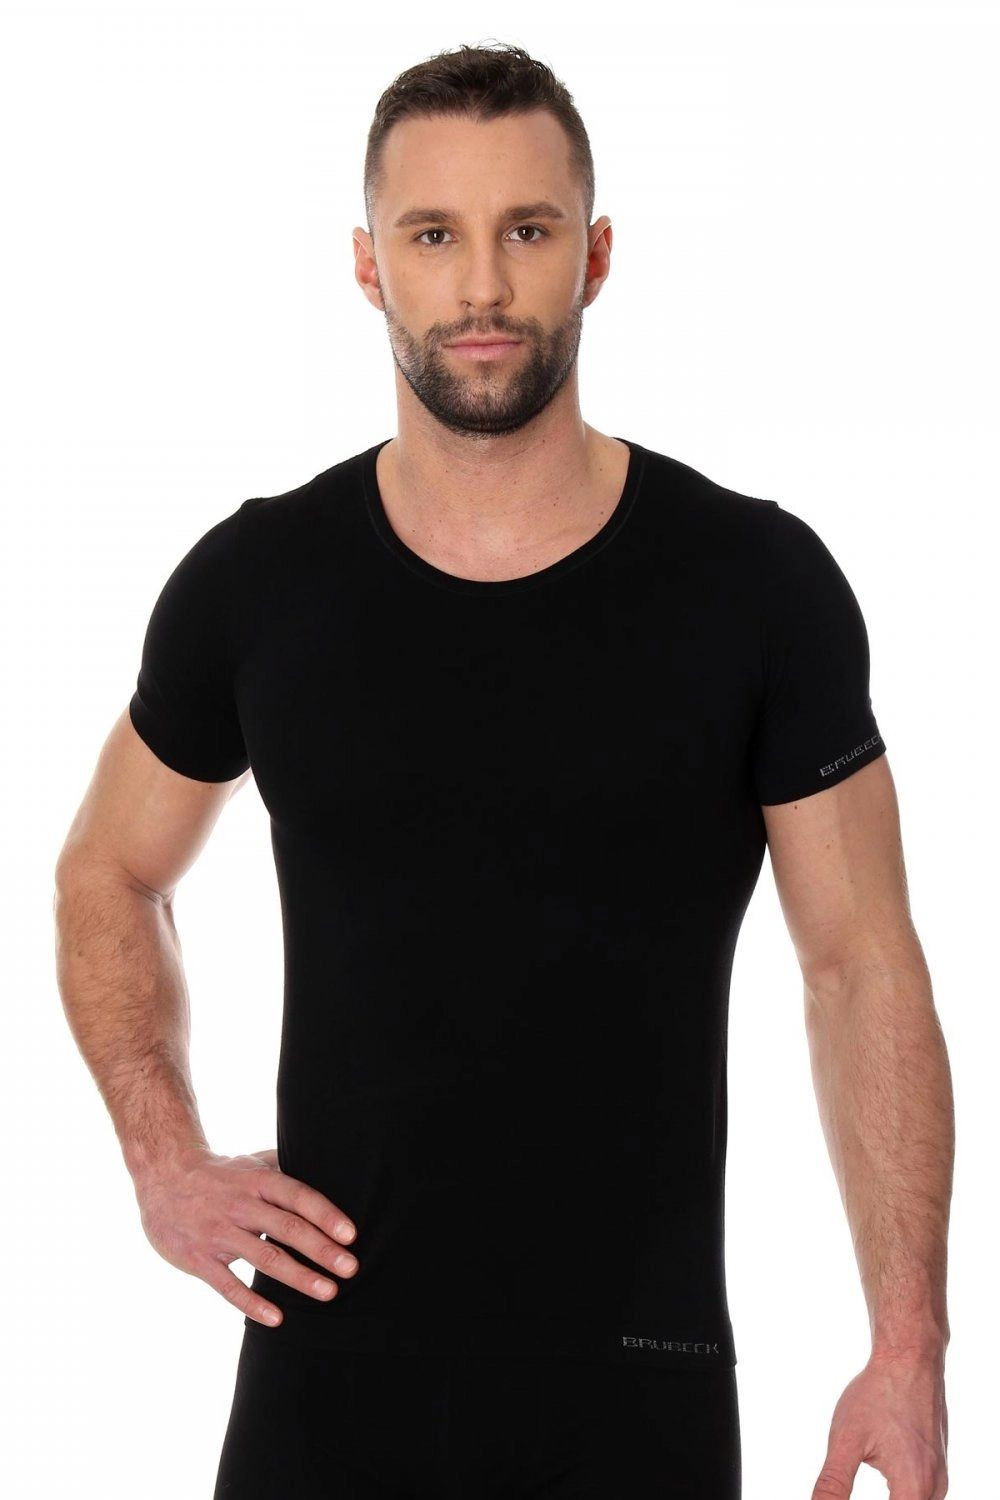 Pánské tričko 00990A black - BRUBECK černá M